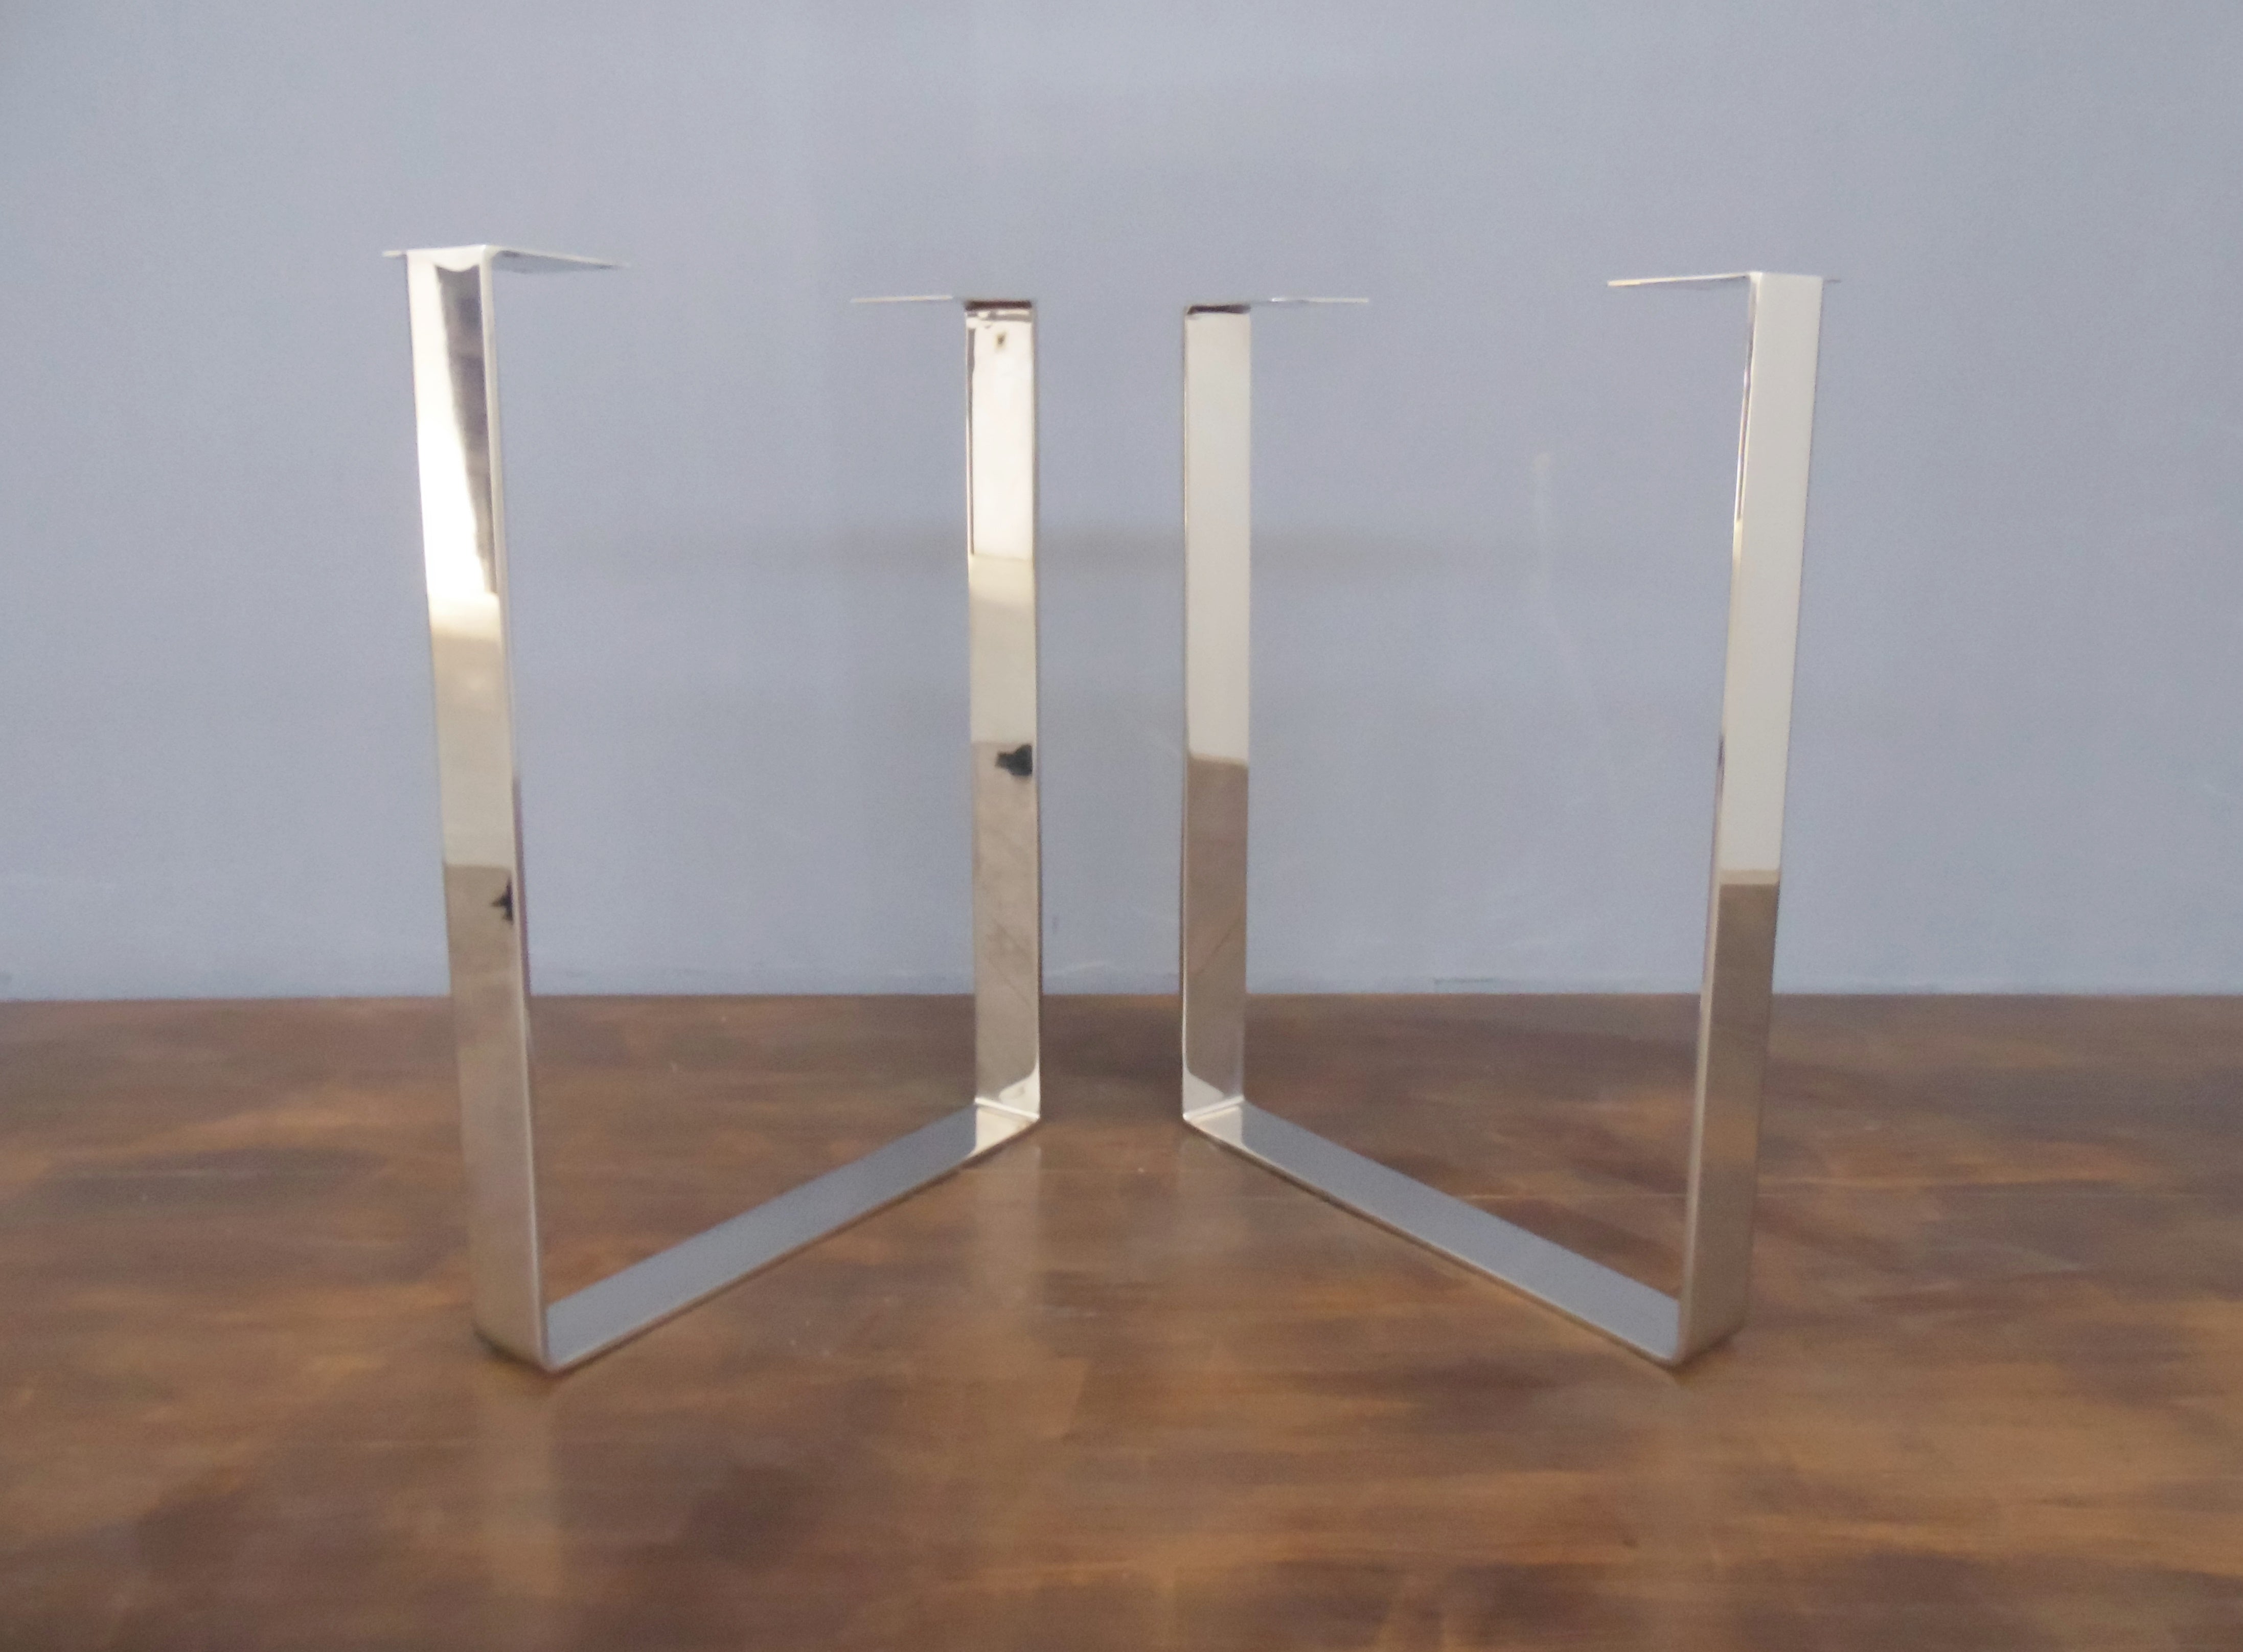 stainless steel table legs for desk tables